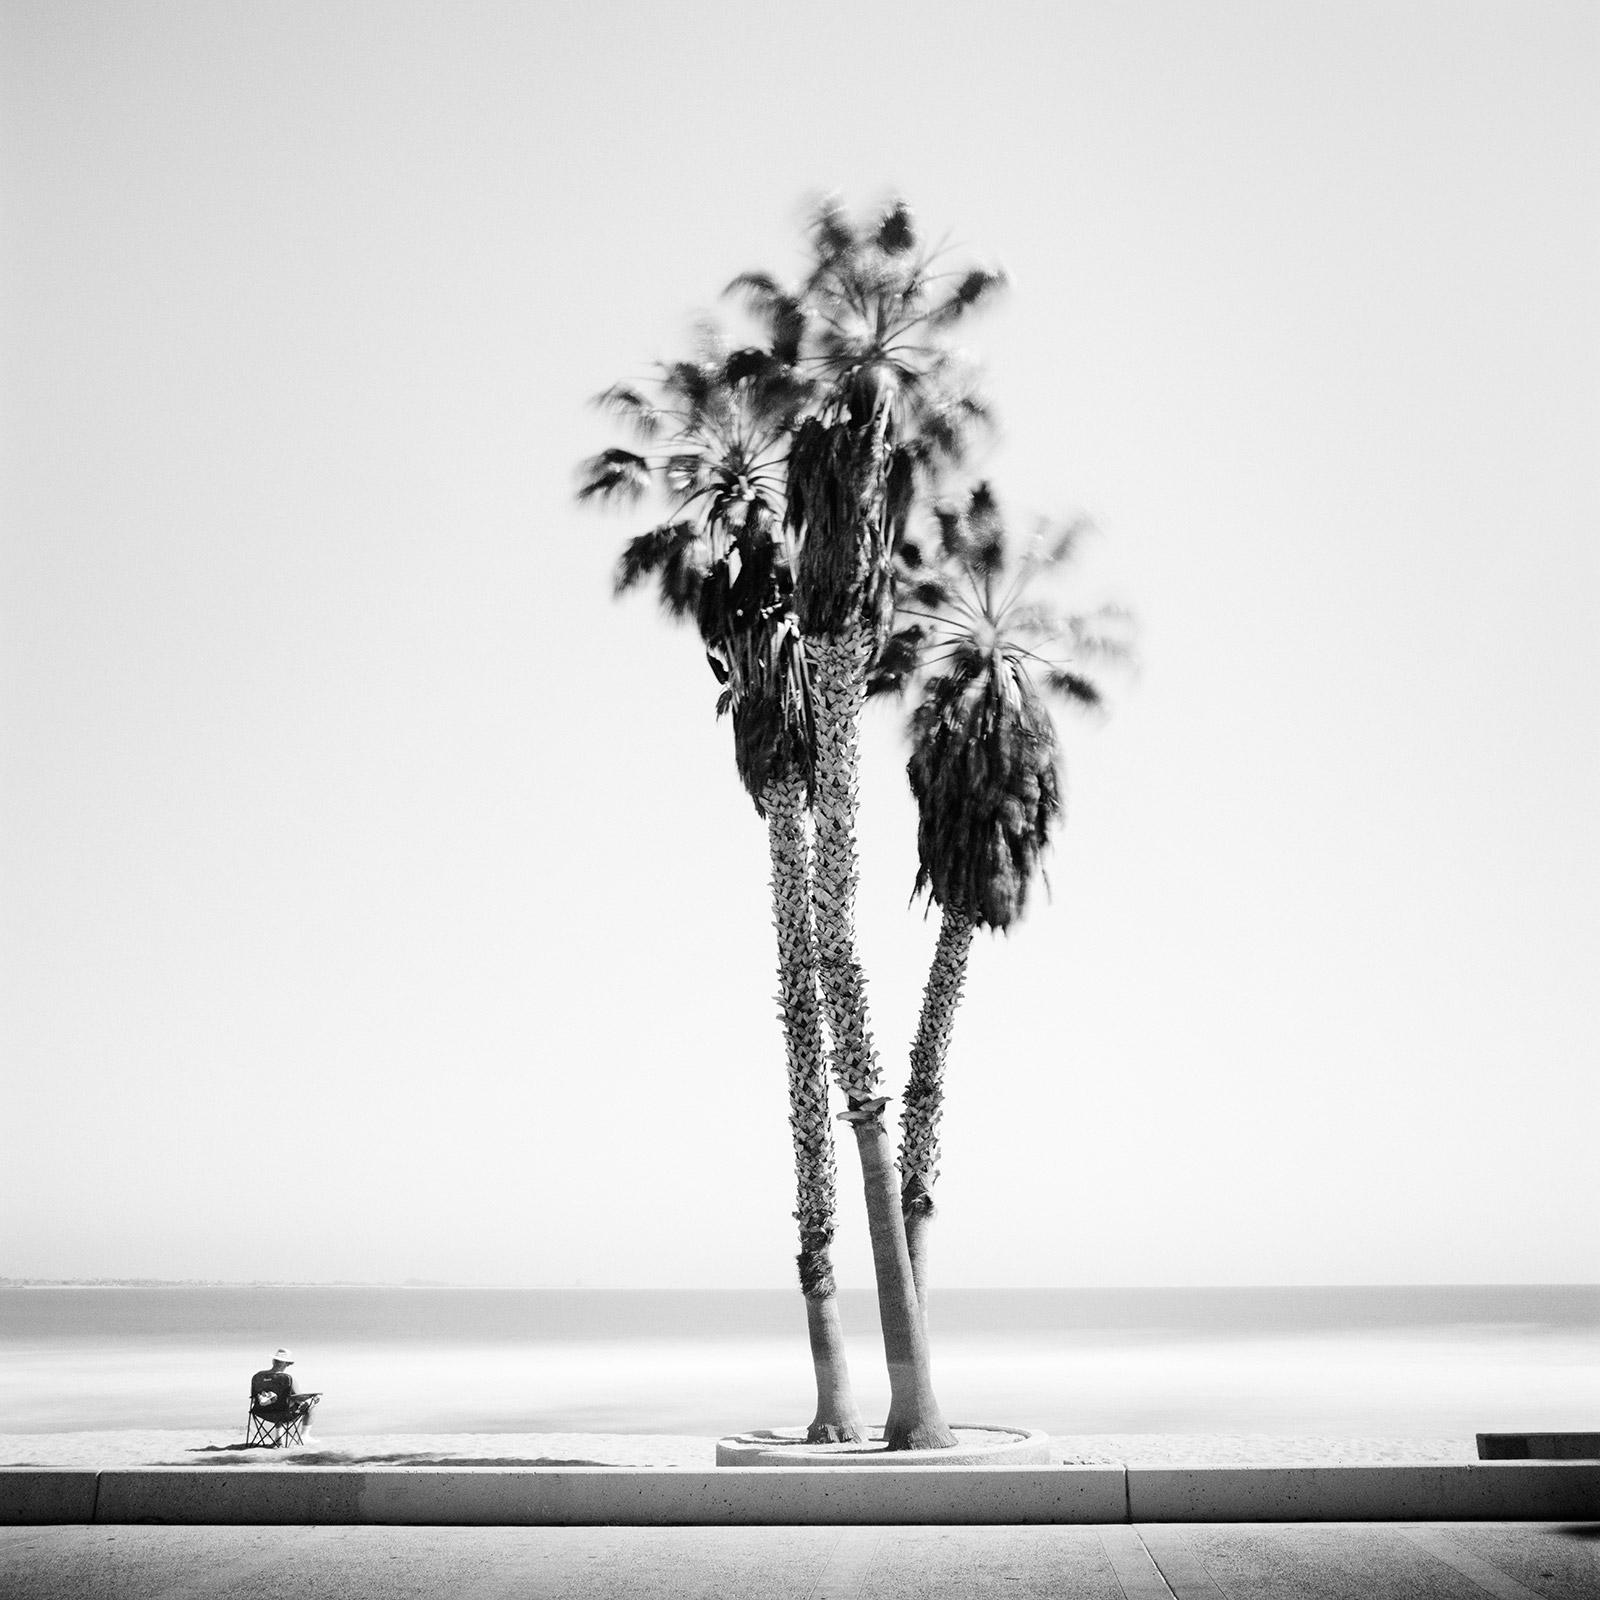 Gerald Berghammer, Ina Forstinger Landscape Photograph - Sunday relaxing, Santa Barbara, California, black and white art image, landscape